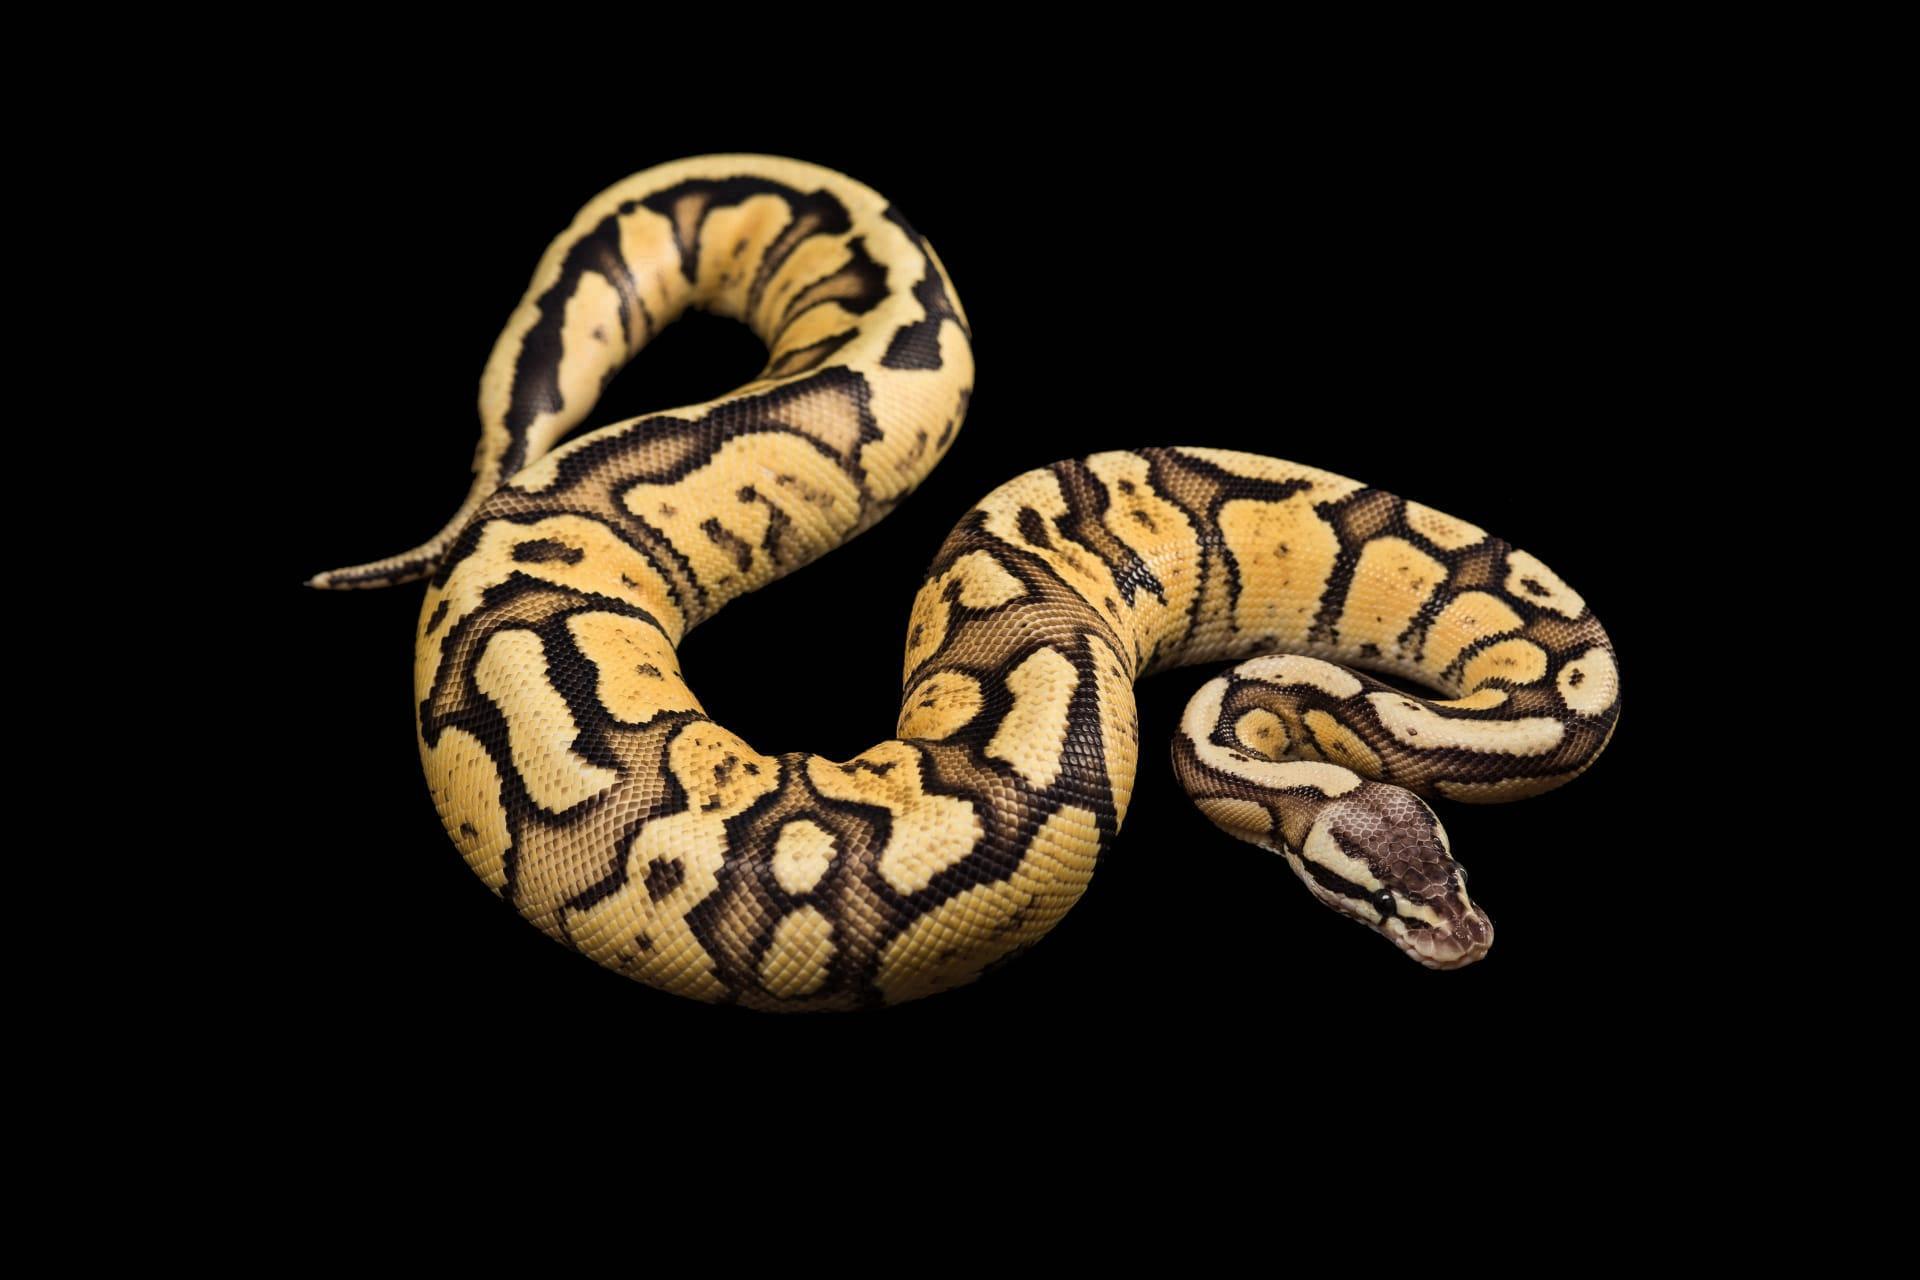 Anaconda snake pictures